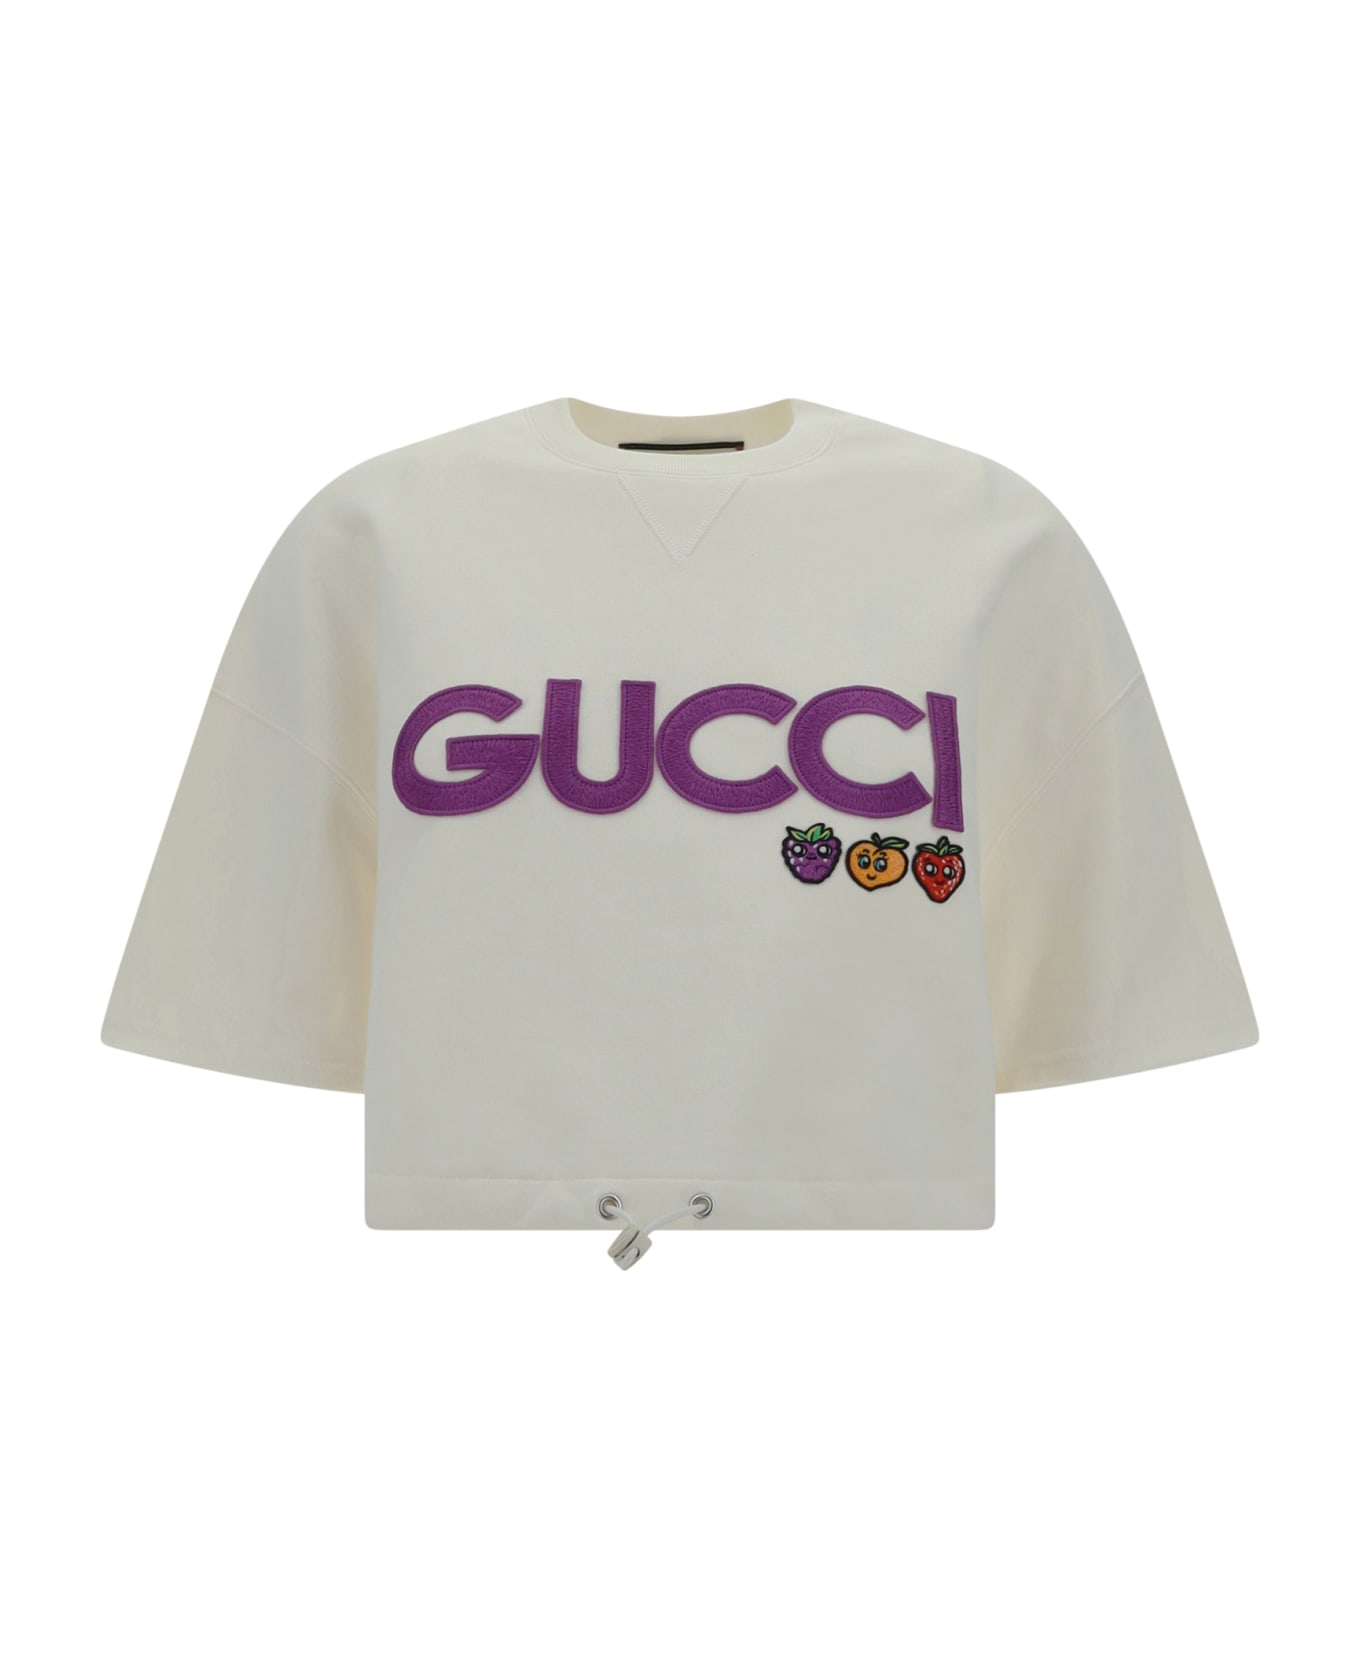 Gucci Sweatshirt - Sunlight/mix